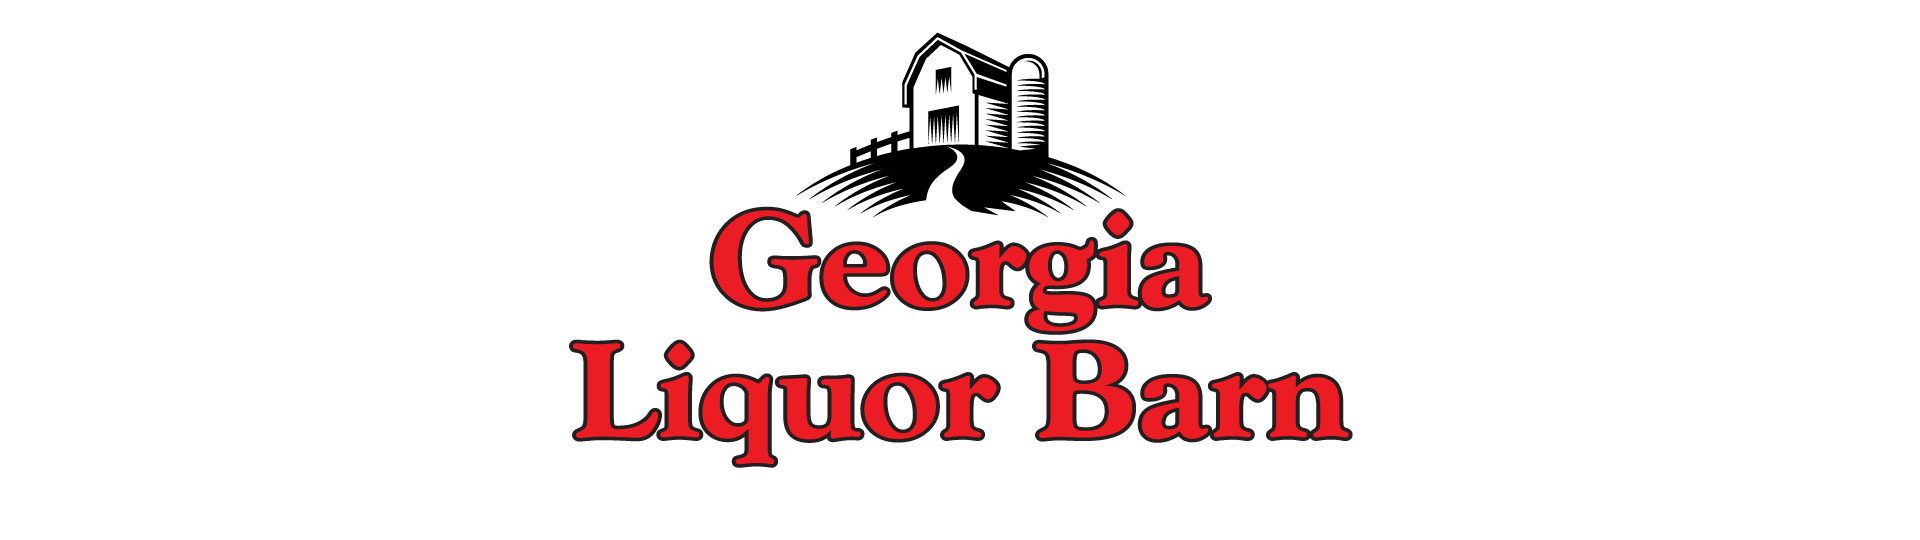 Georgia Liquor Barn